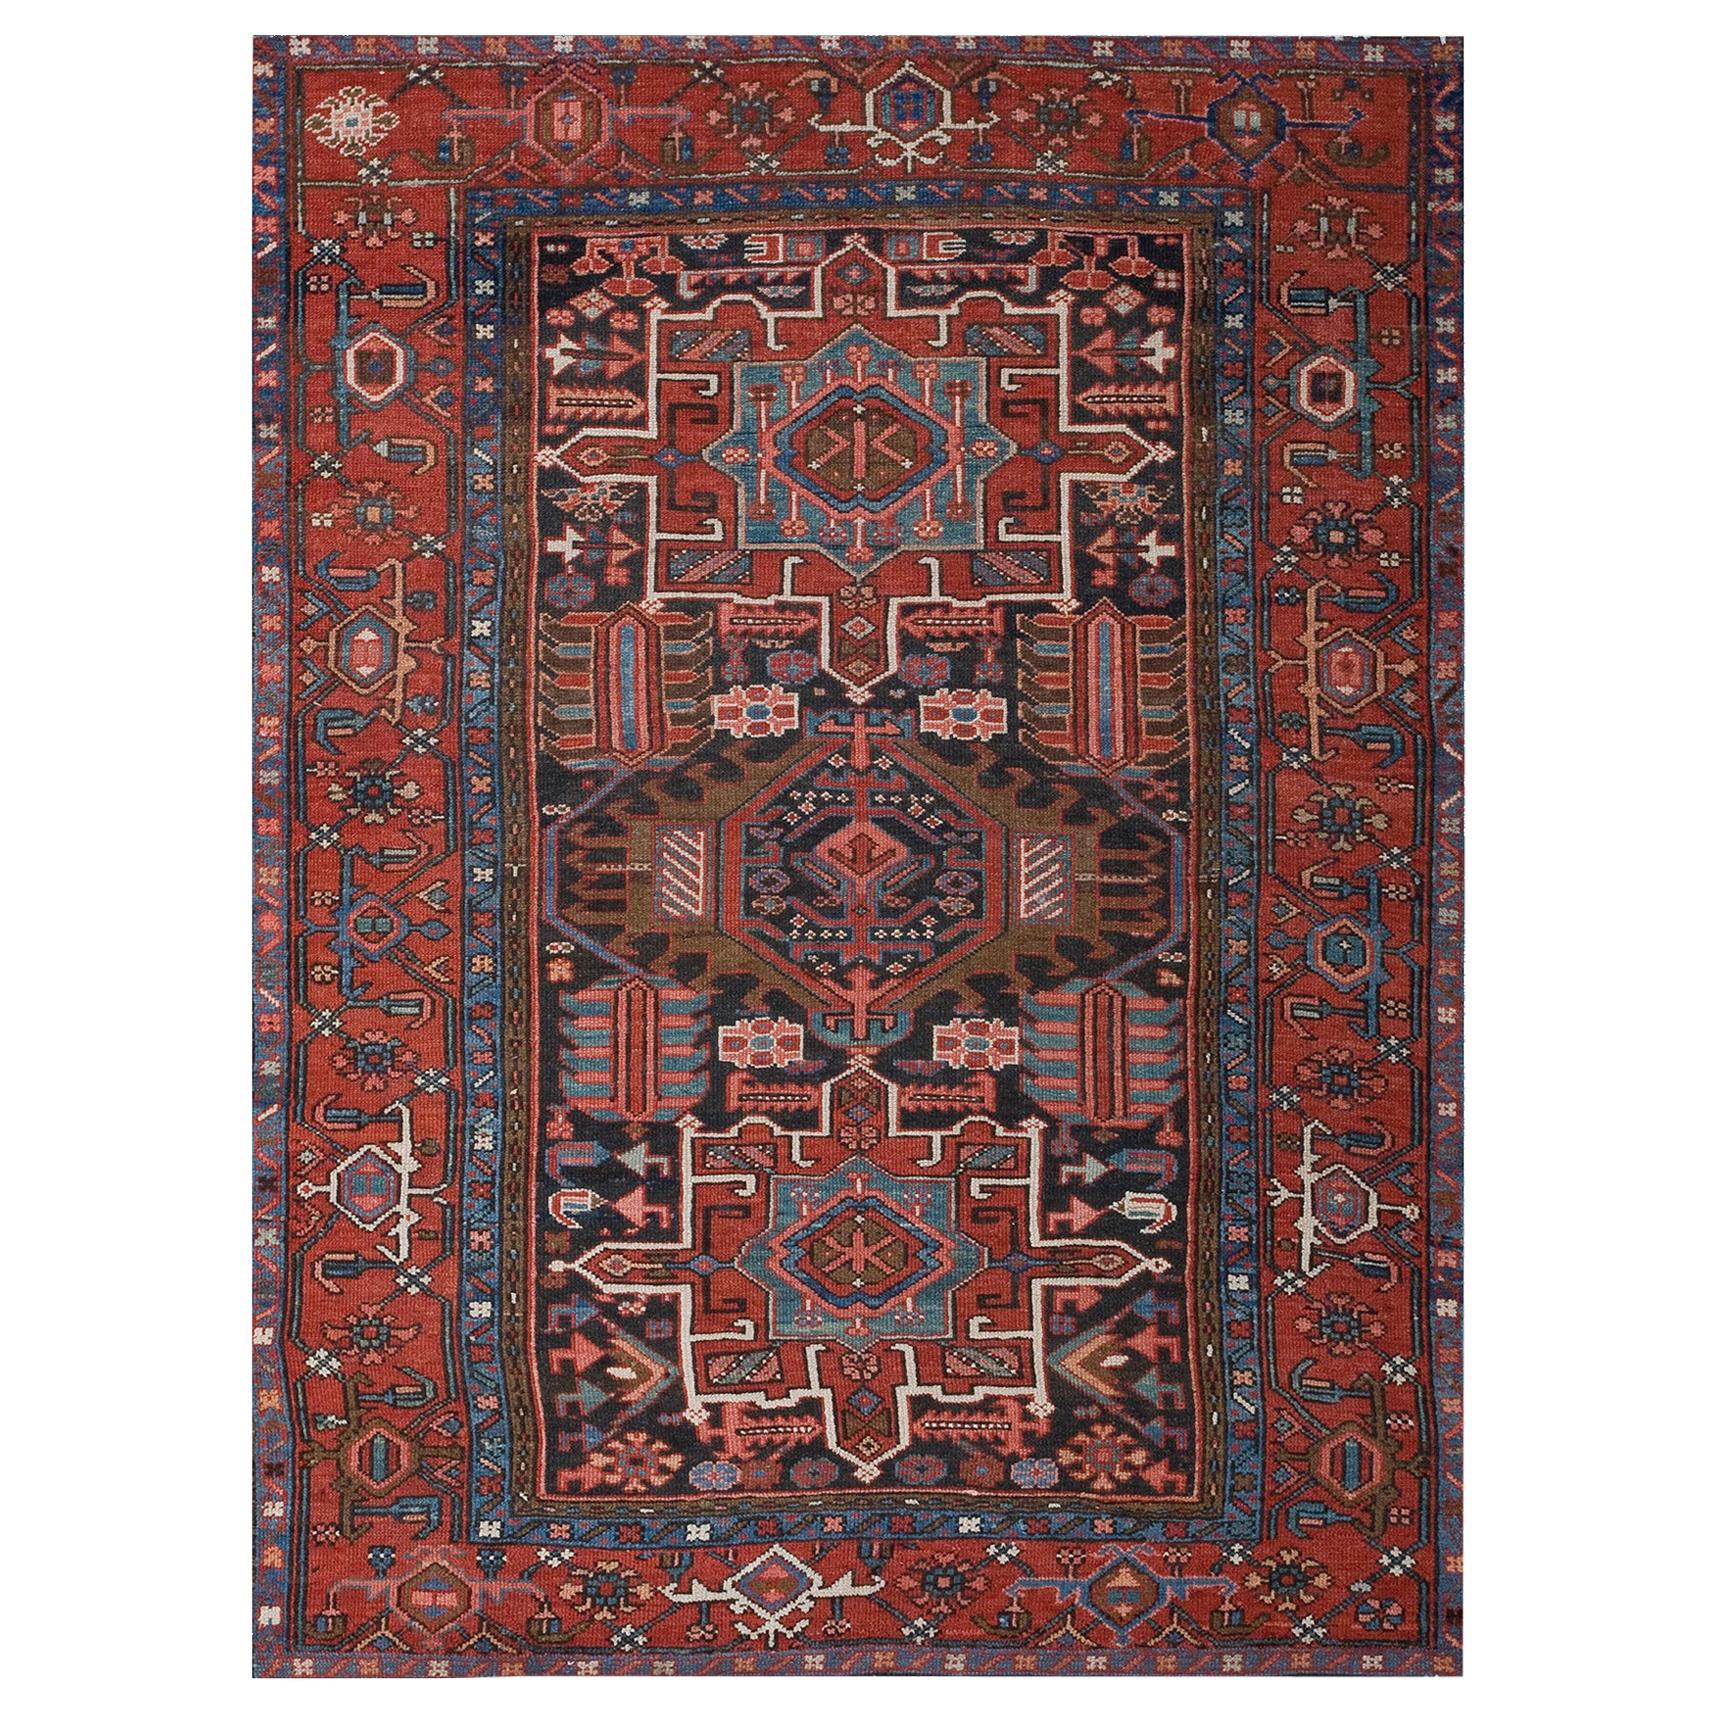 Early 20th Century N.W. Persian Karajeh Carpet ( 4'6" x 6' - 137 x 183 )